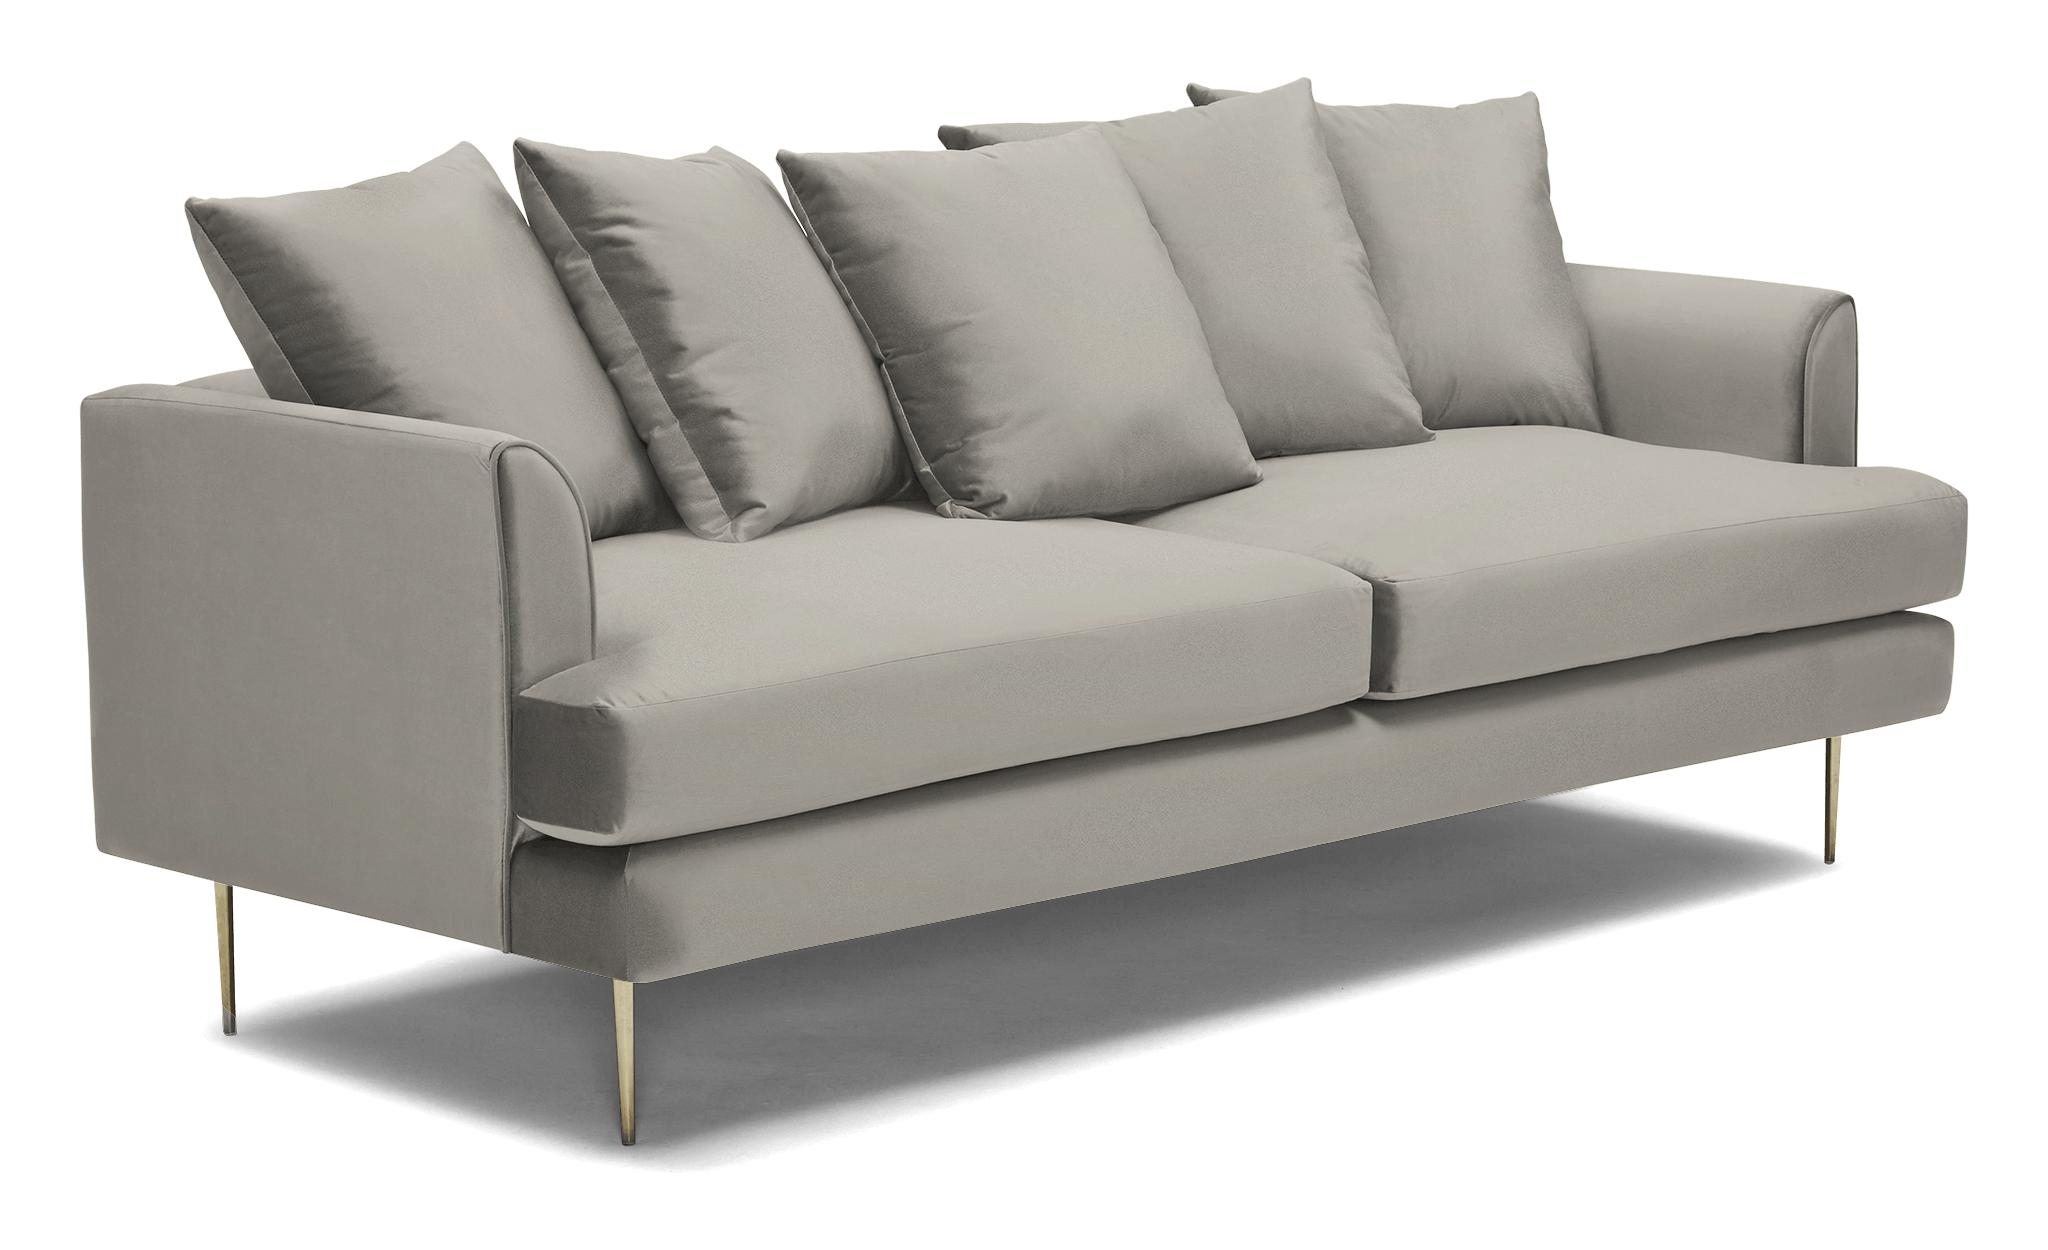 White Aime Mid Century Modern Sofa - Bloke Cotton - Image 1